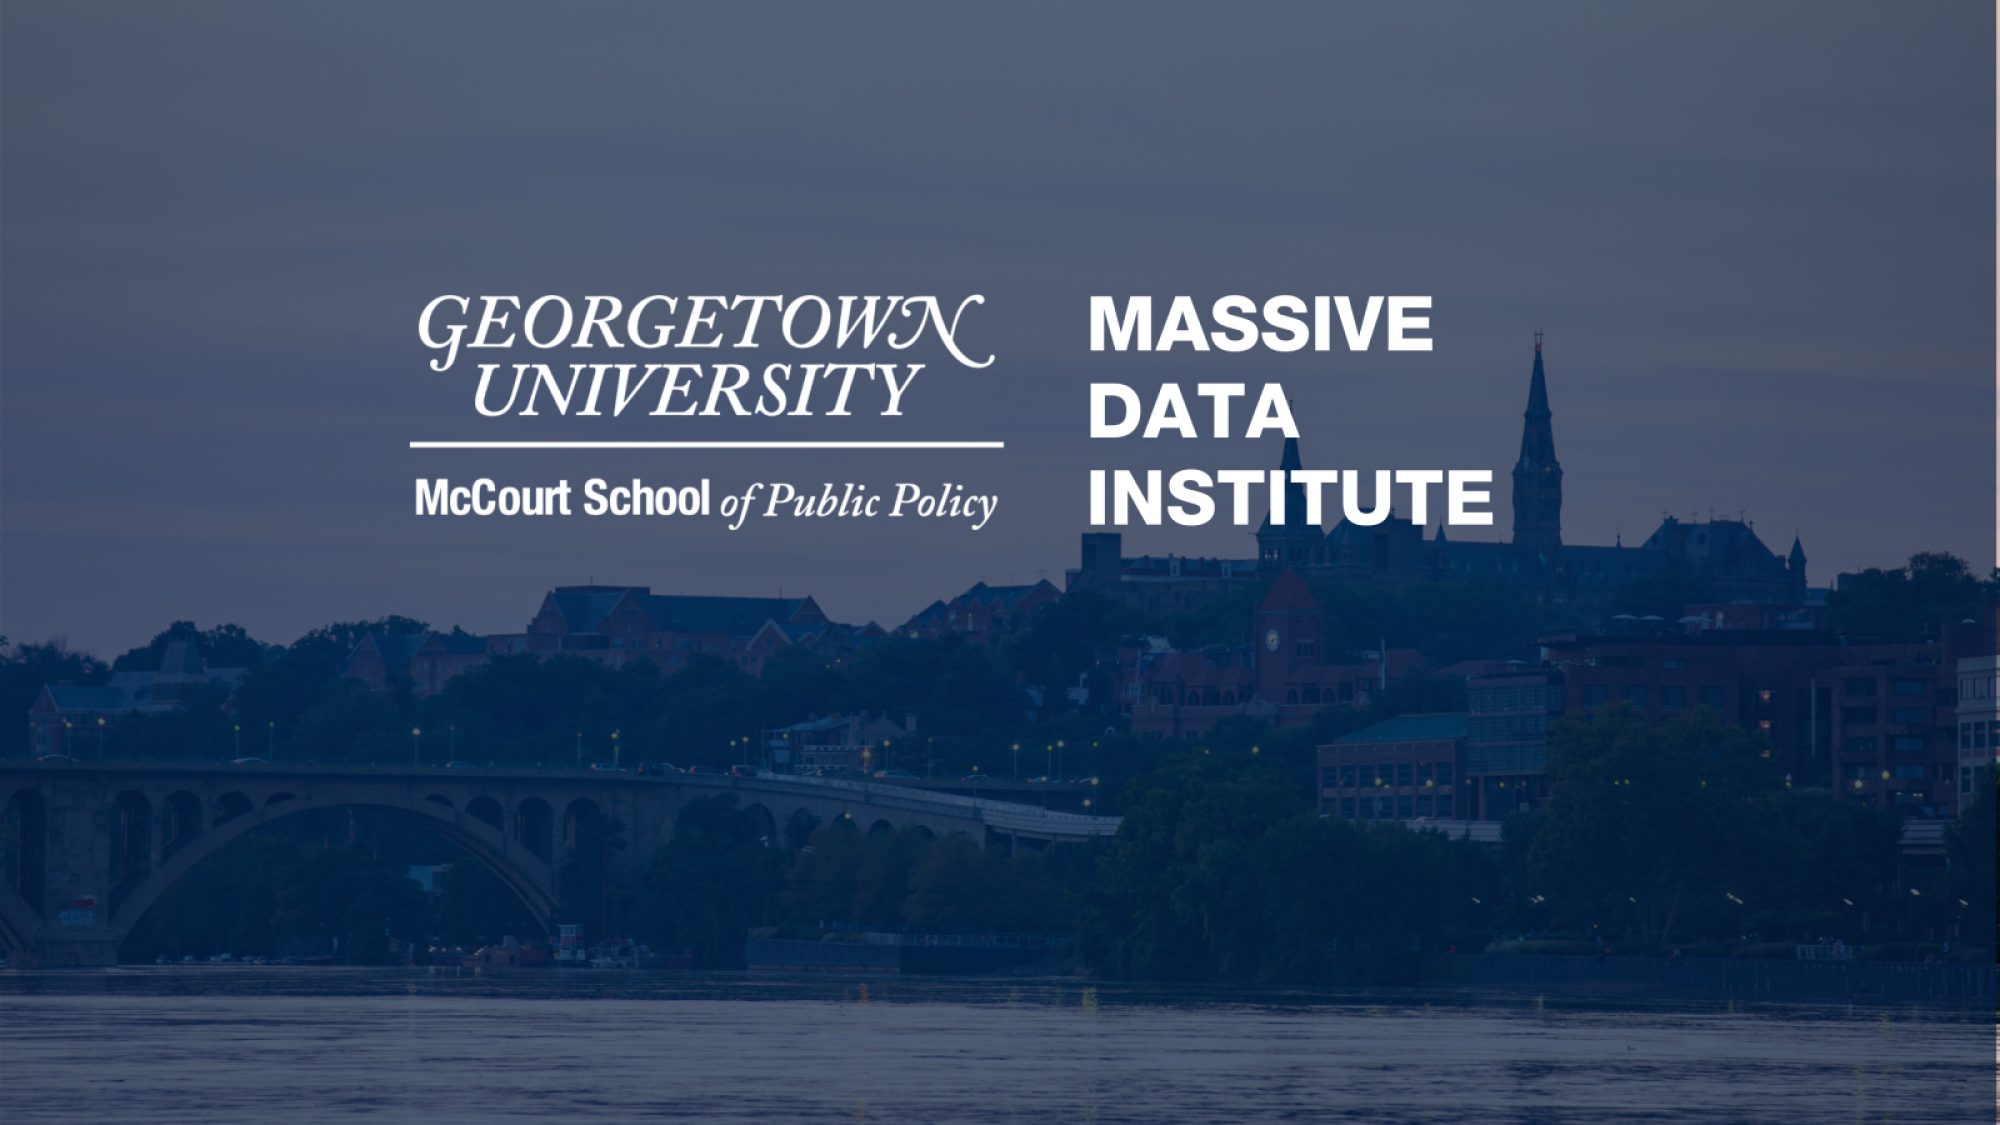 Massive Data Institute logo on background of skyline view of Georgetown University